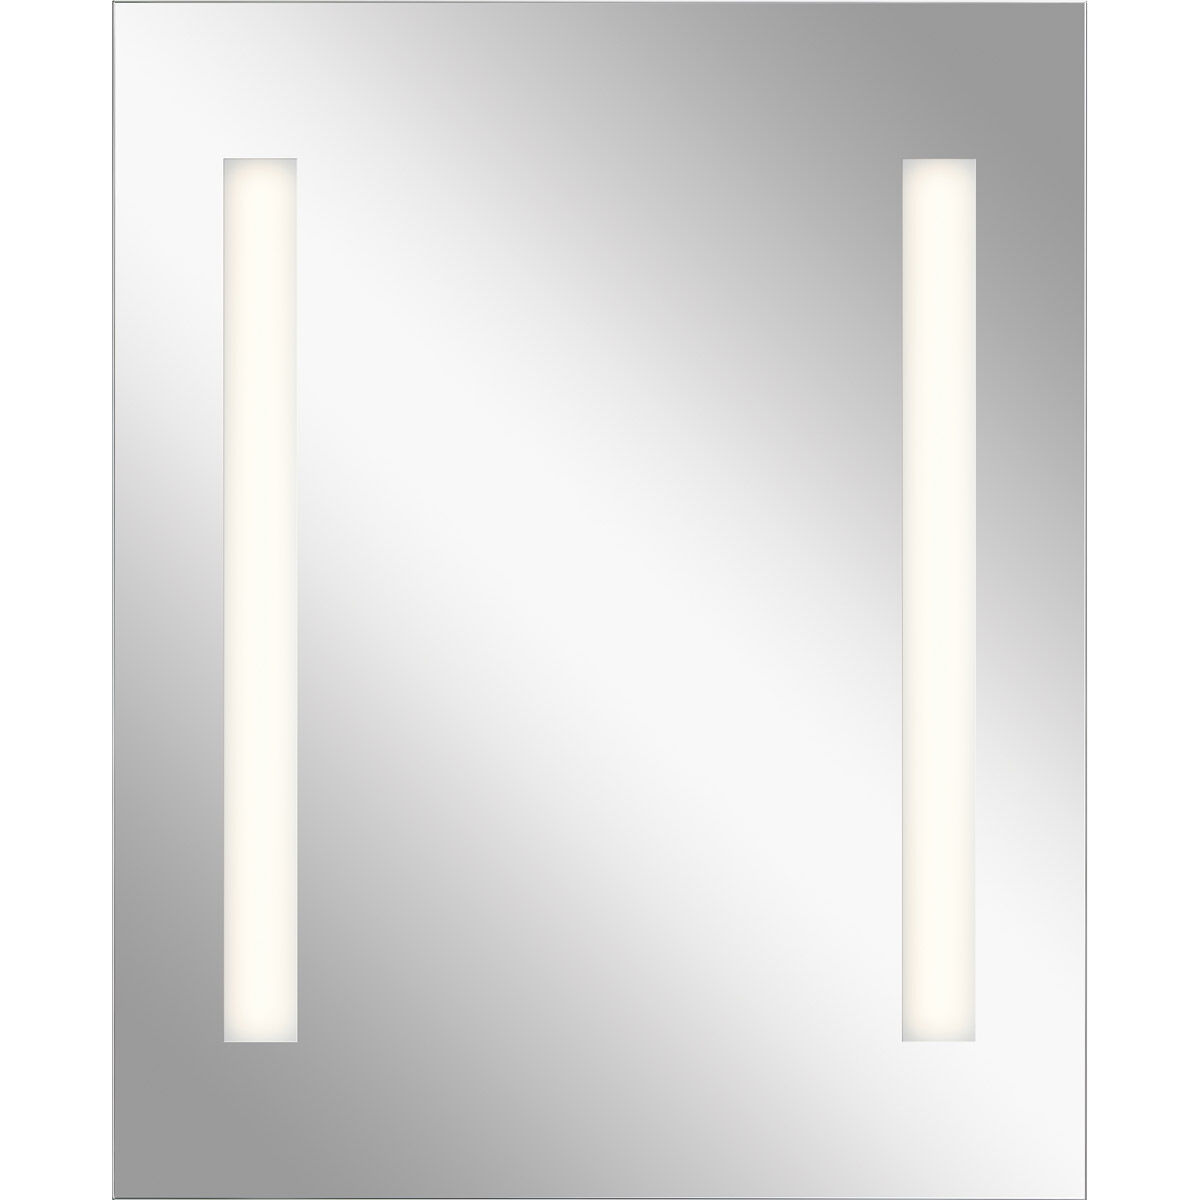 Signature Wall Mirror, with Soundbar